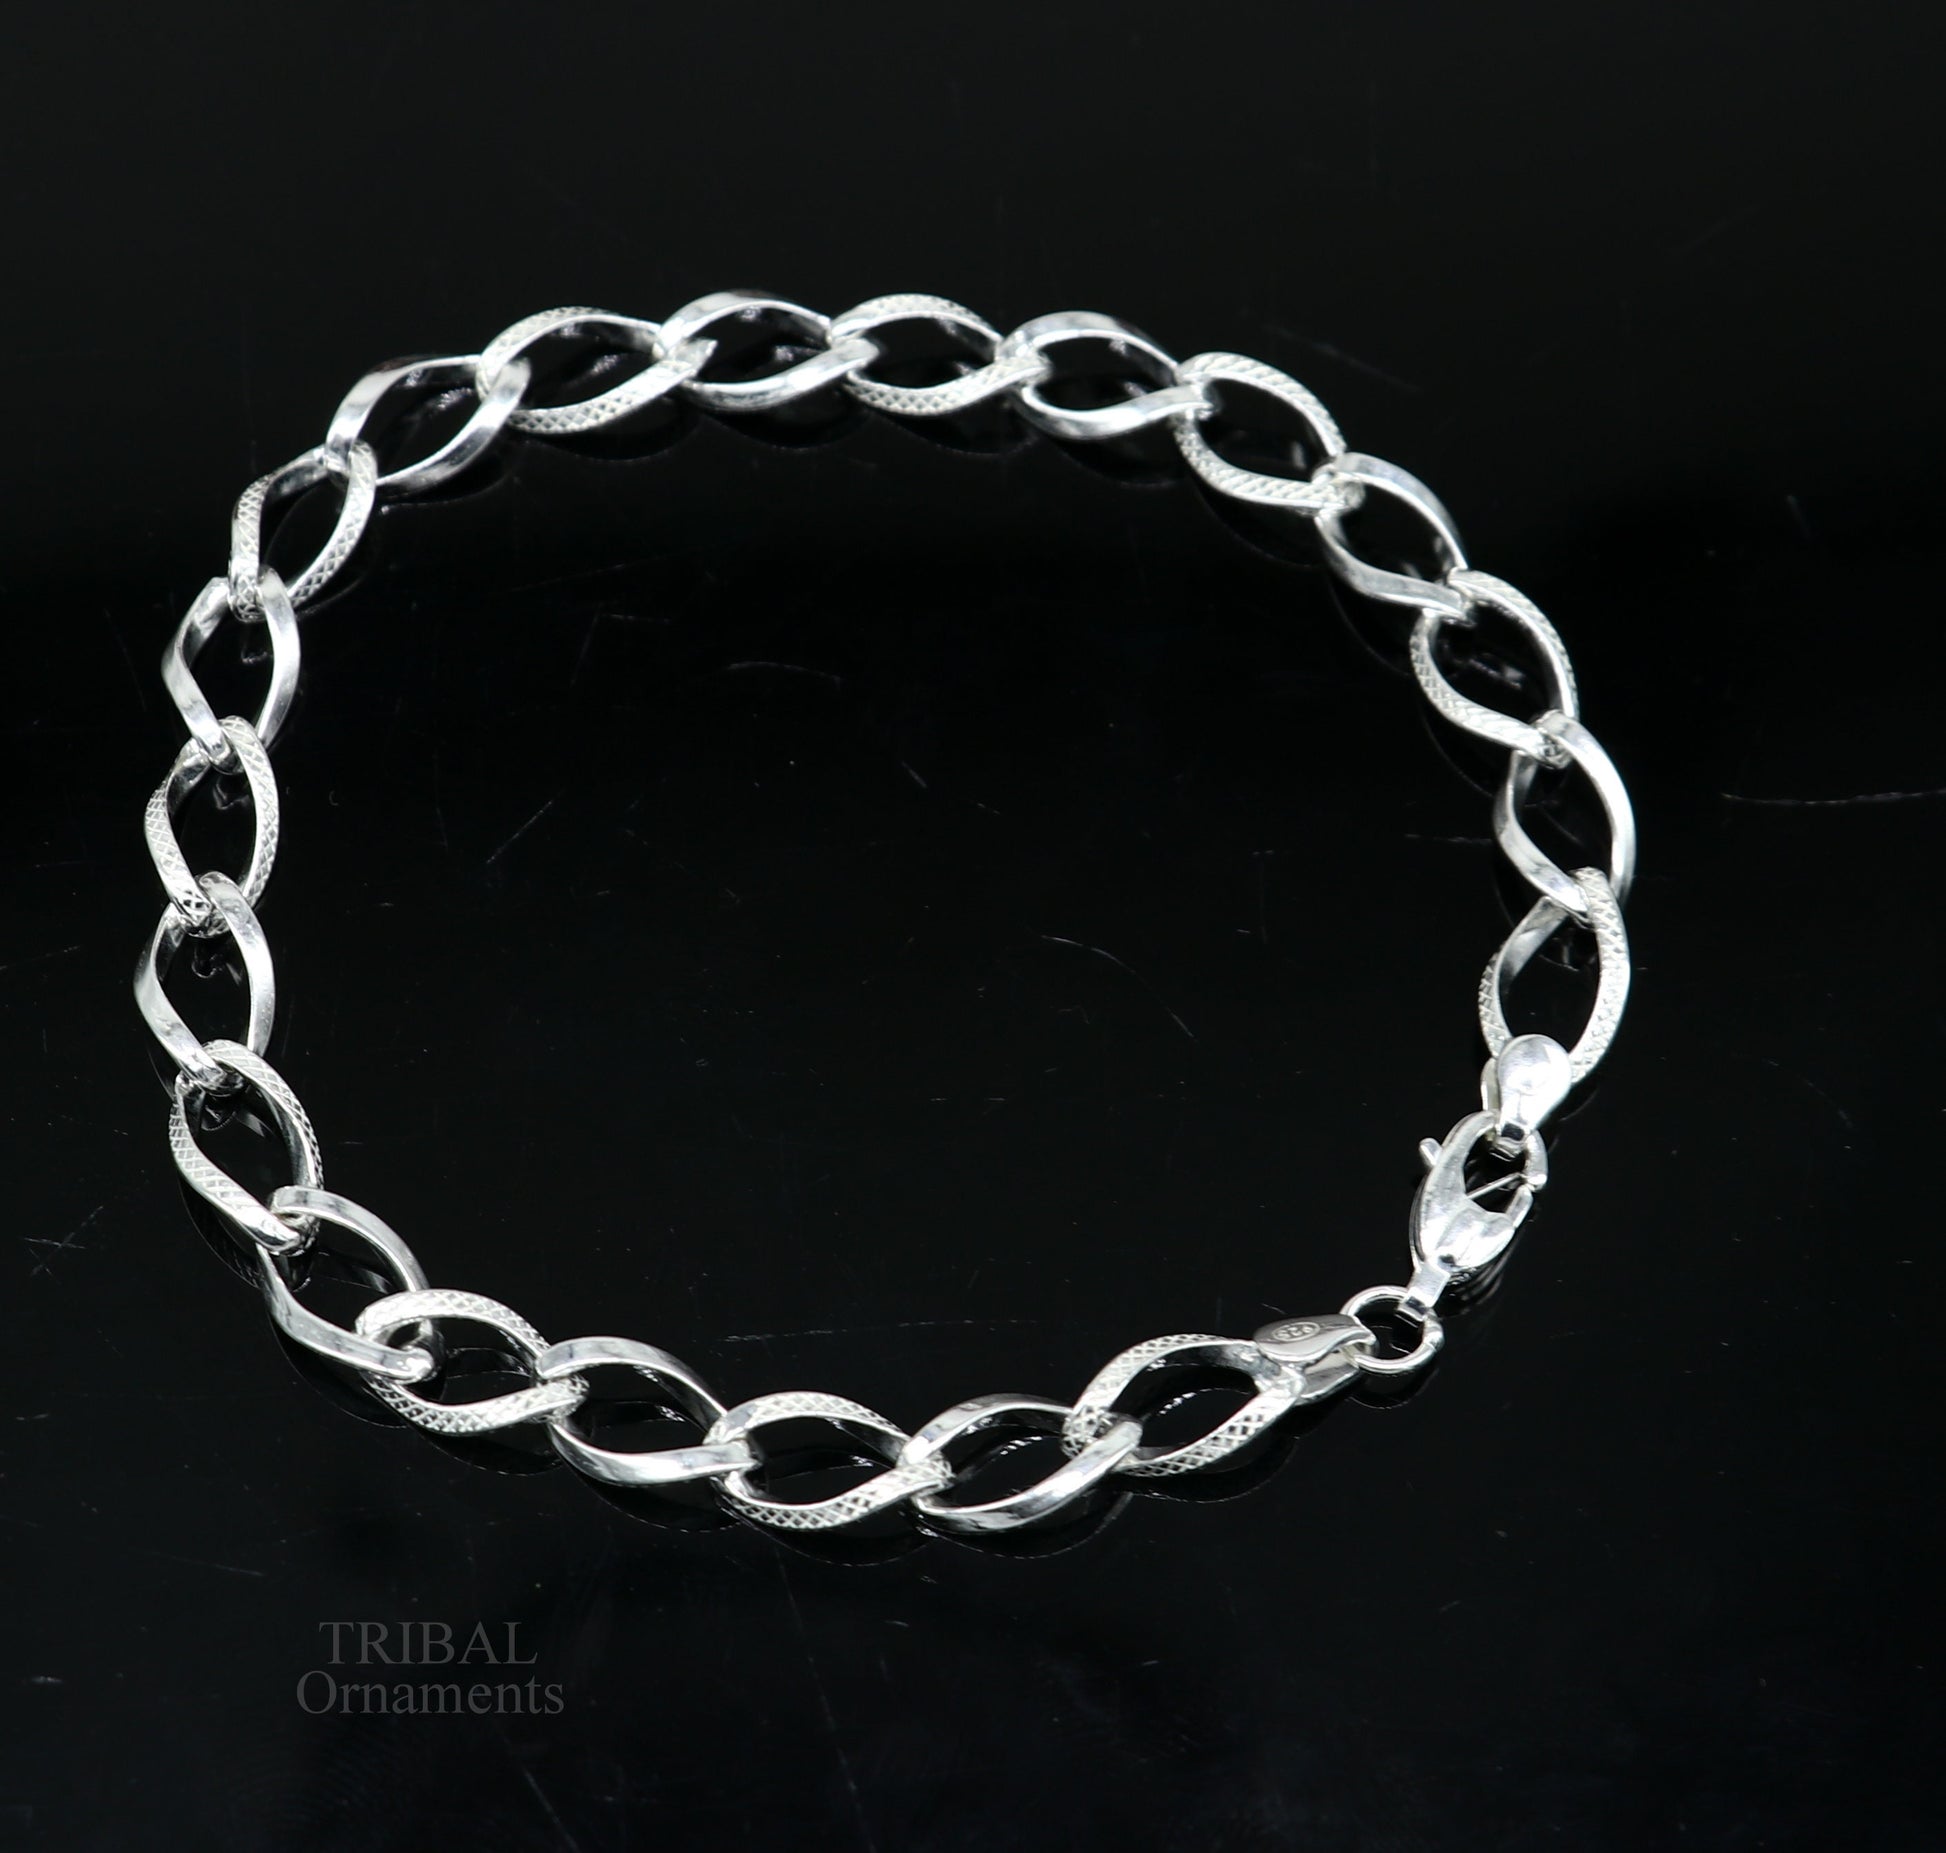 8" girl's bracelet 925 sterling silver handmade new fancy stylish solid chain bracelet, stylish bracelet  gifting elegant jewelry nsbr520 - TRIBAL ORNAMENTS